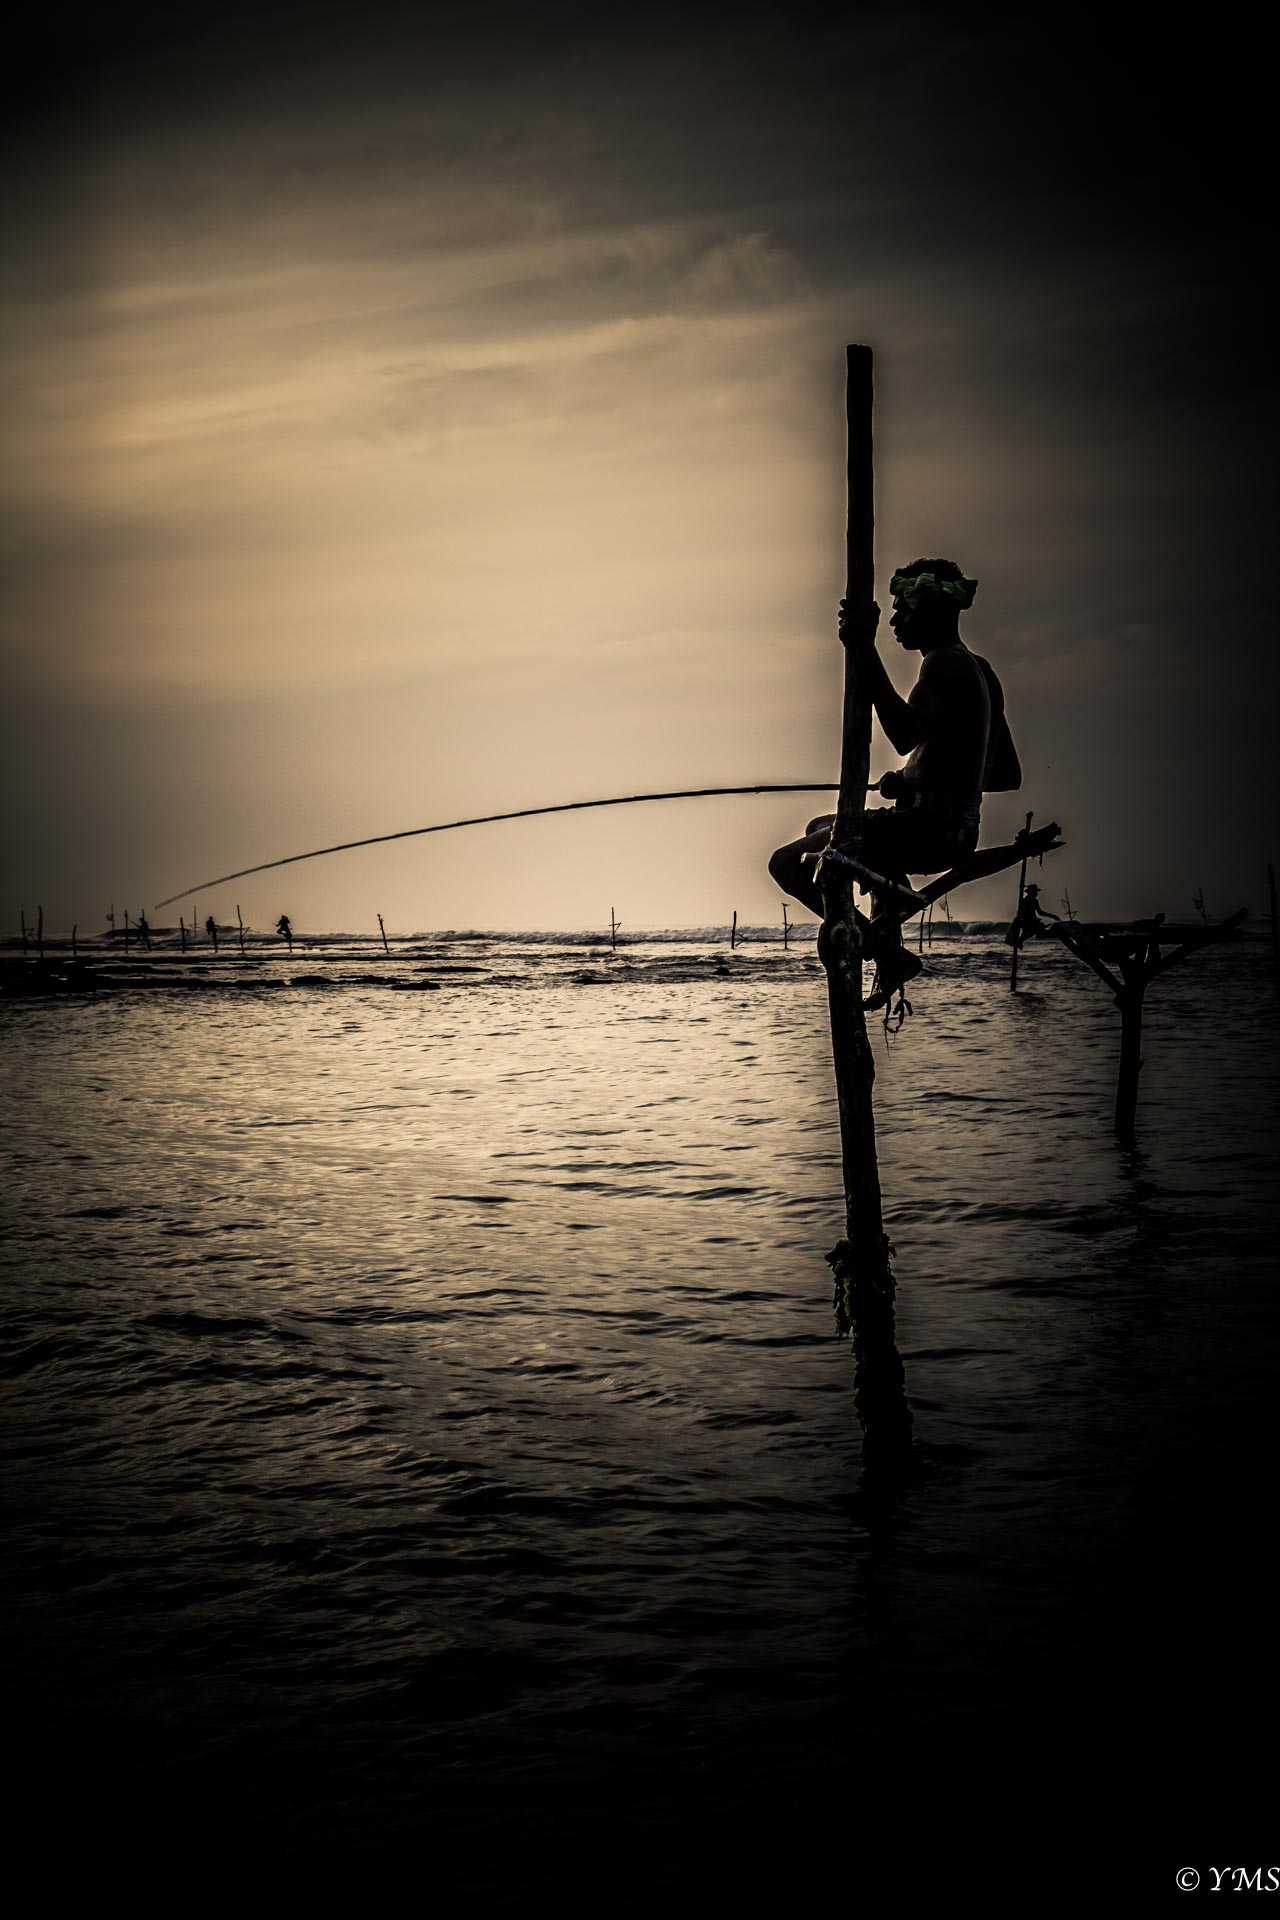 Sri Lanka - Fisherman on stilts